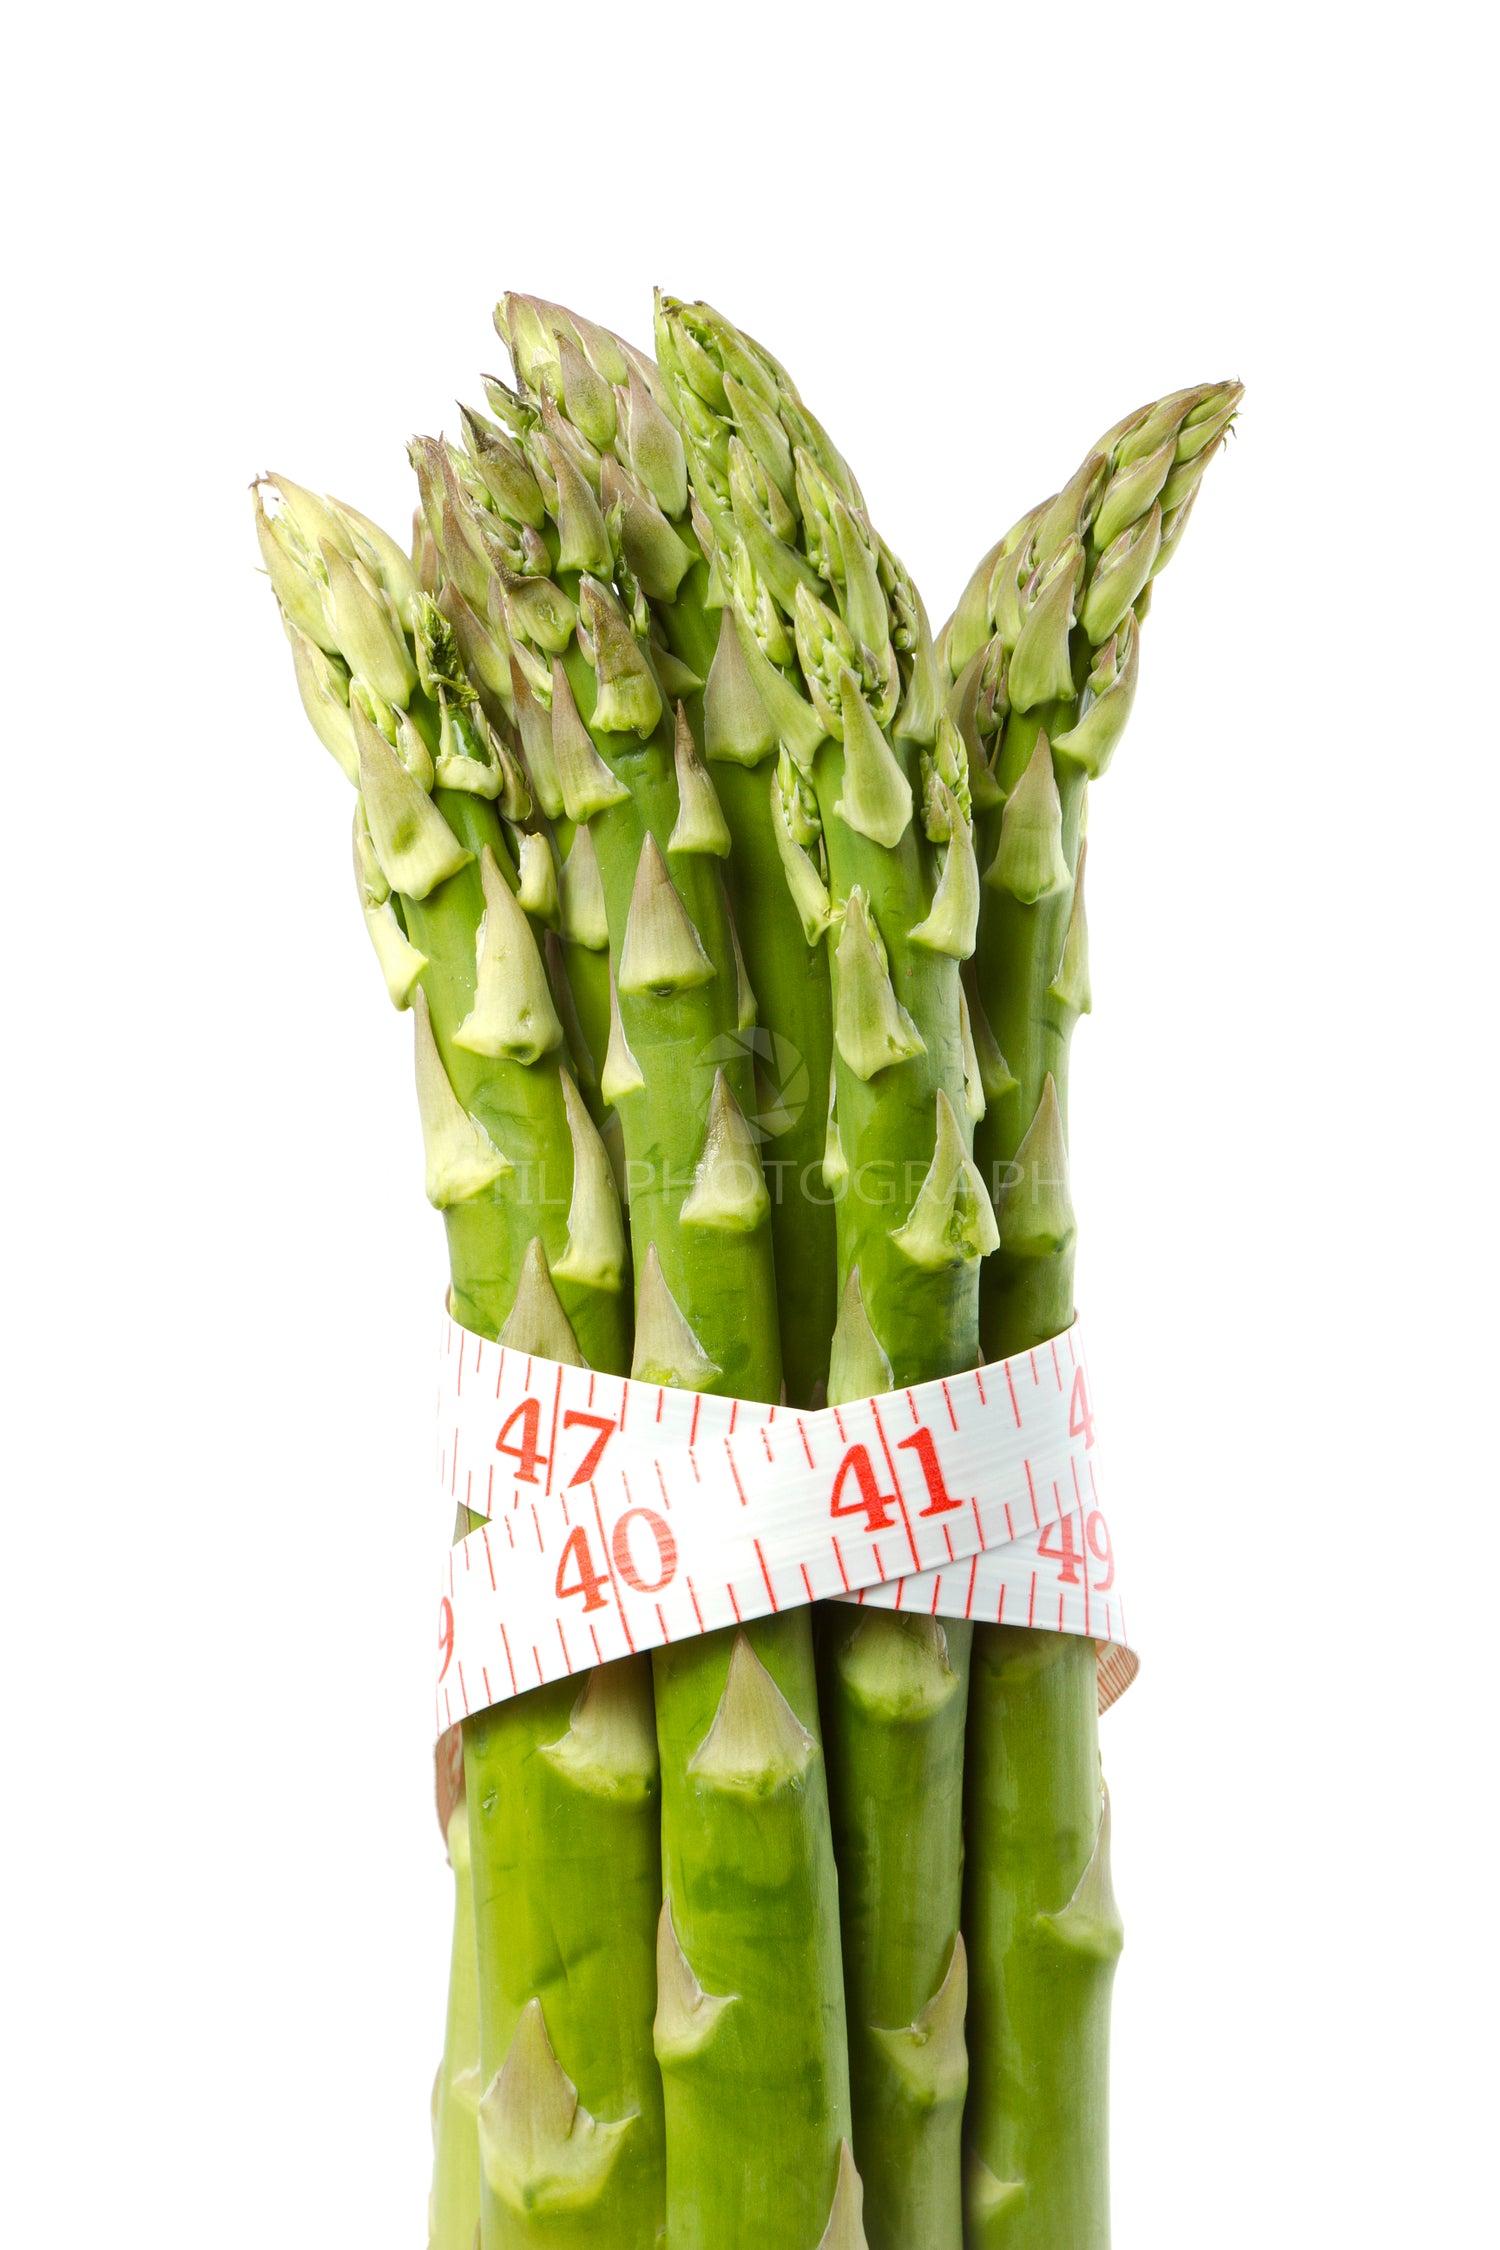 Diet Concept with Asparagus